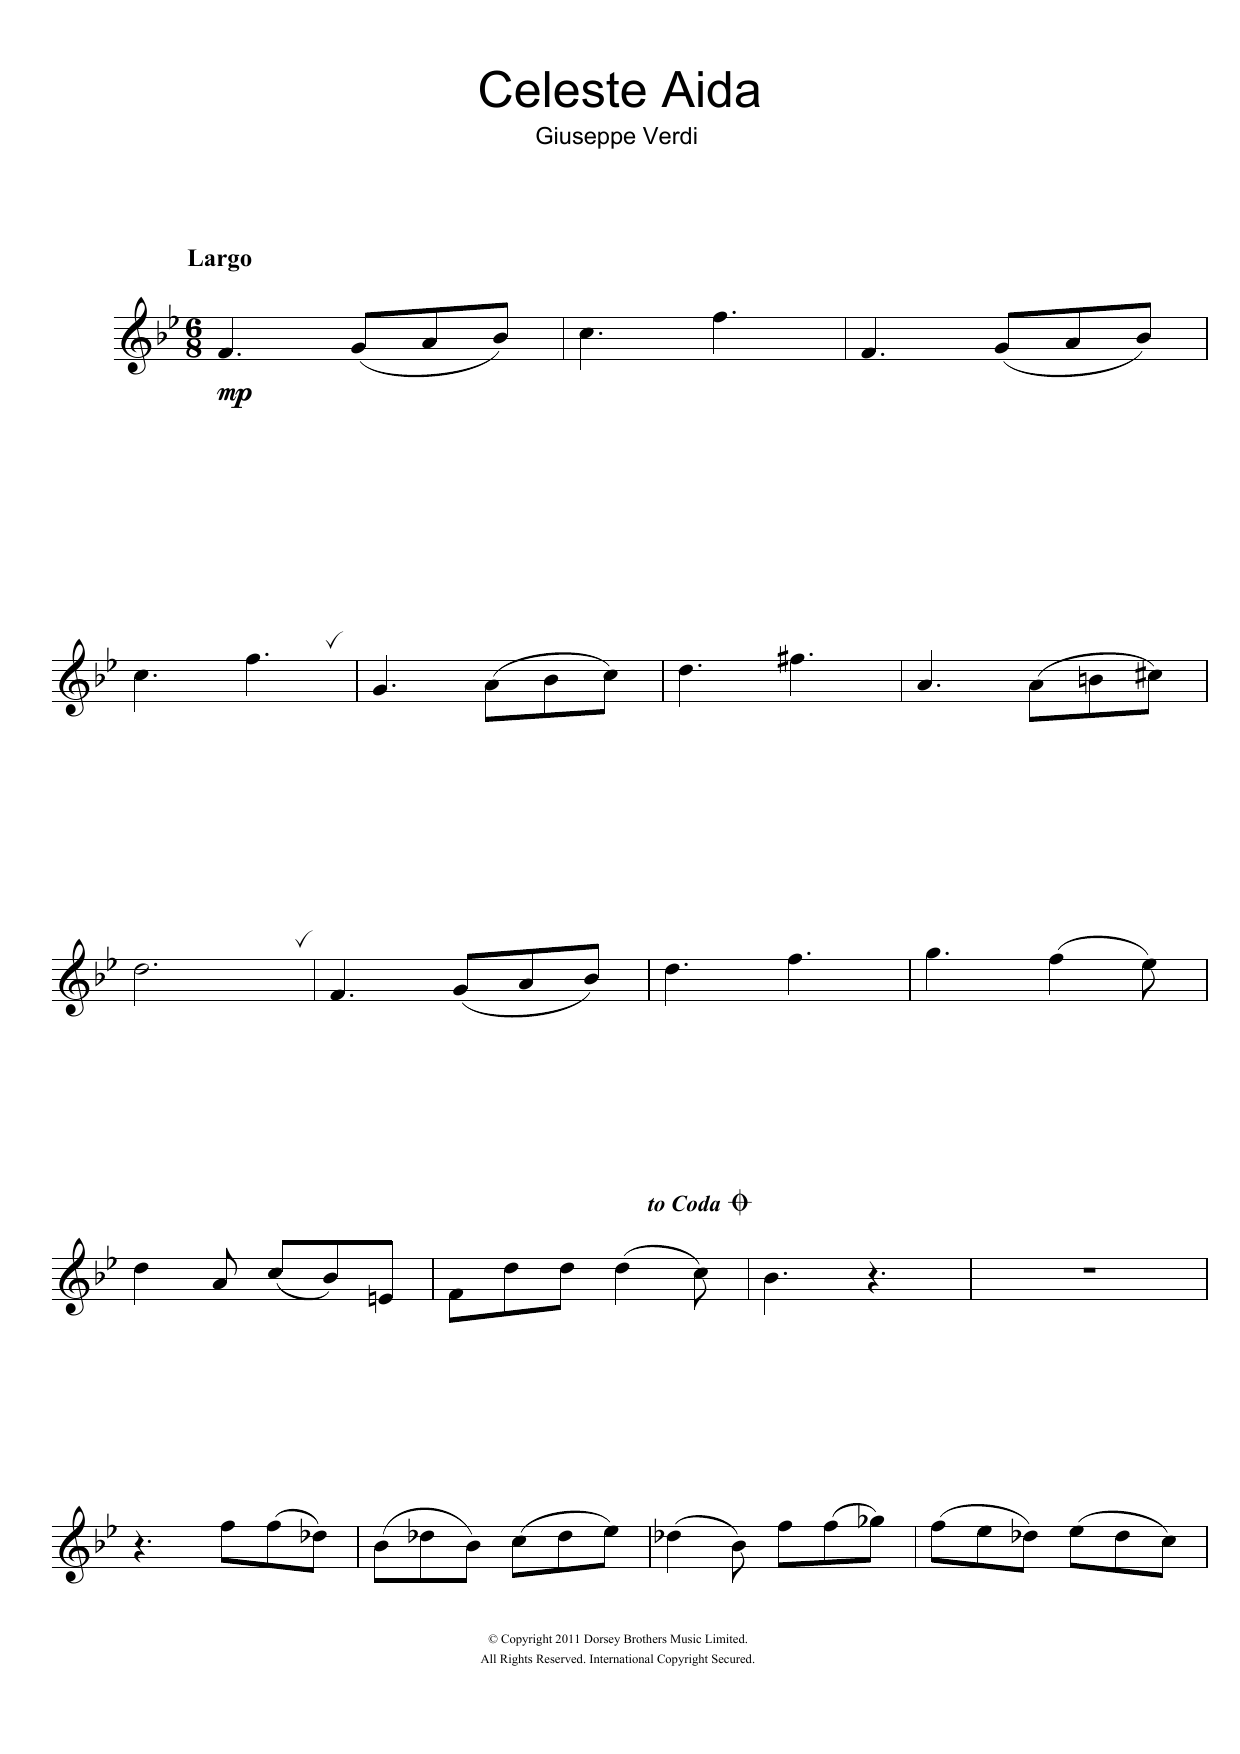 Giuseppe Verdi Celeste Aida (from Aida) Sheet Music Notes & Chords for Clarinet - Download or Print PDF